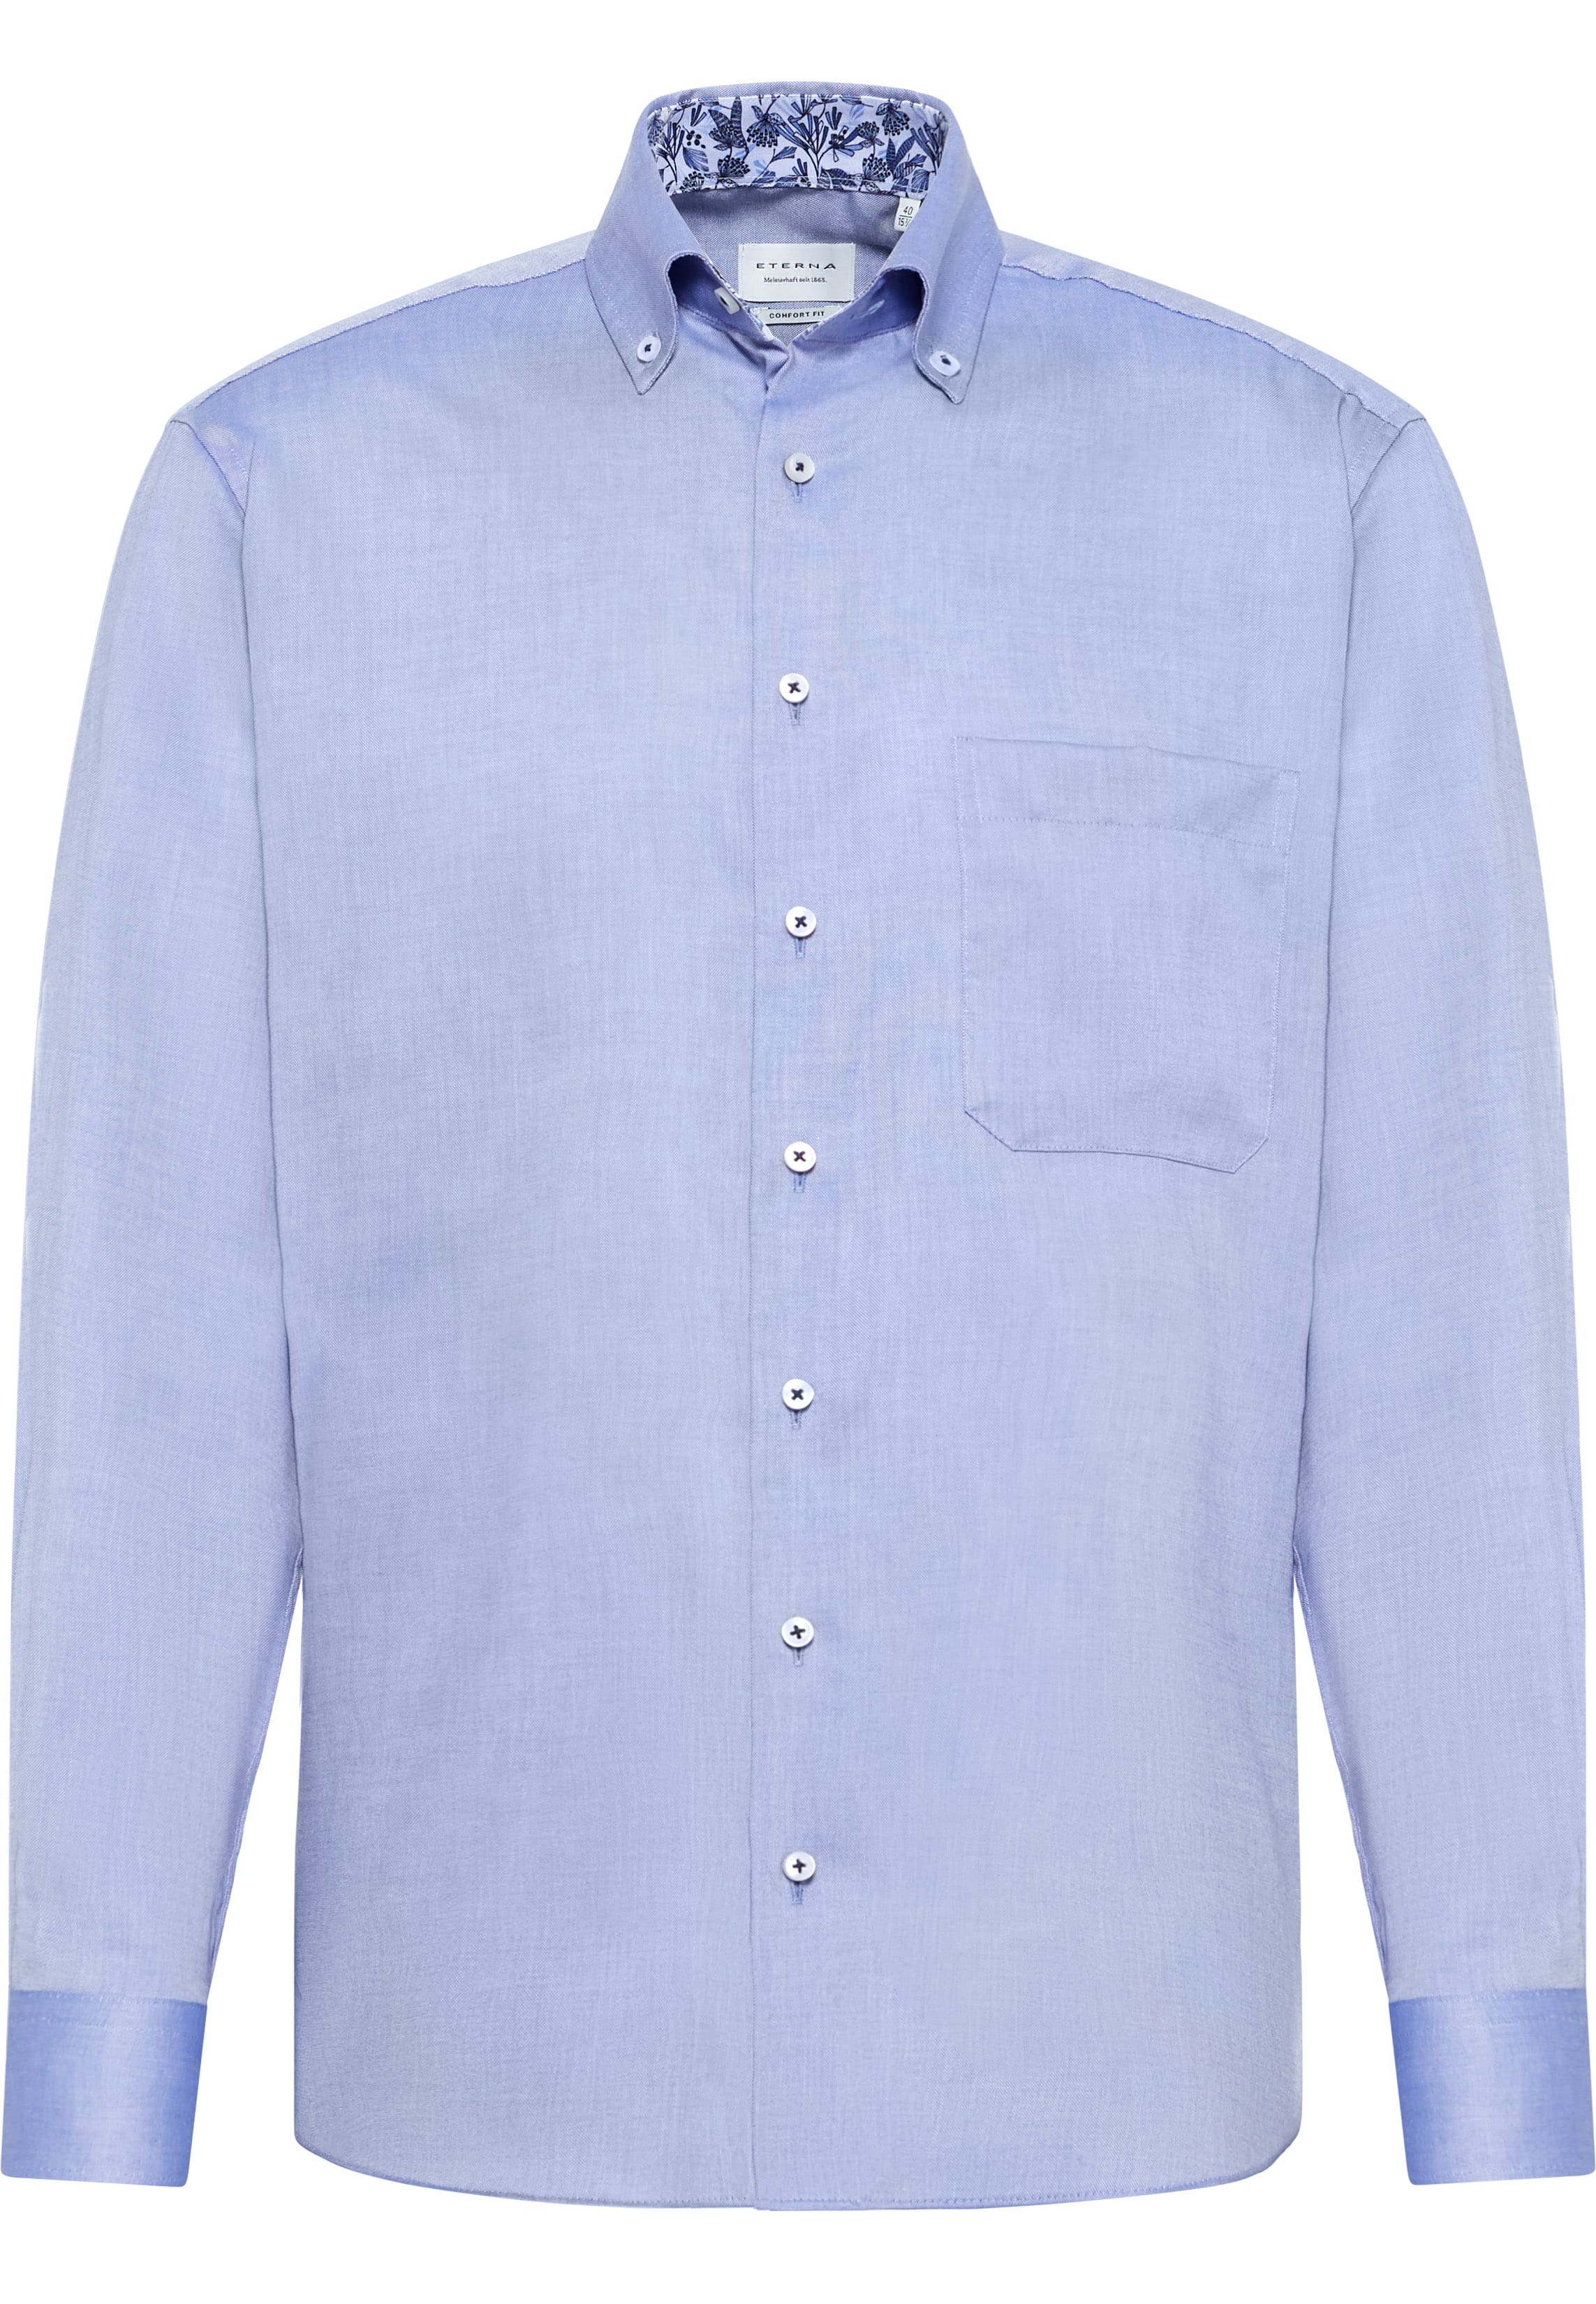 COMFORT FIT Shirt in royal blue plain